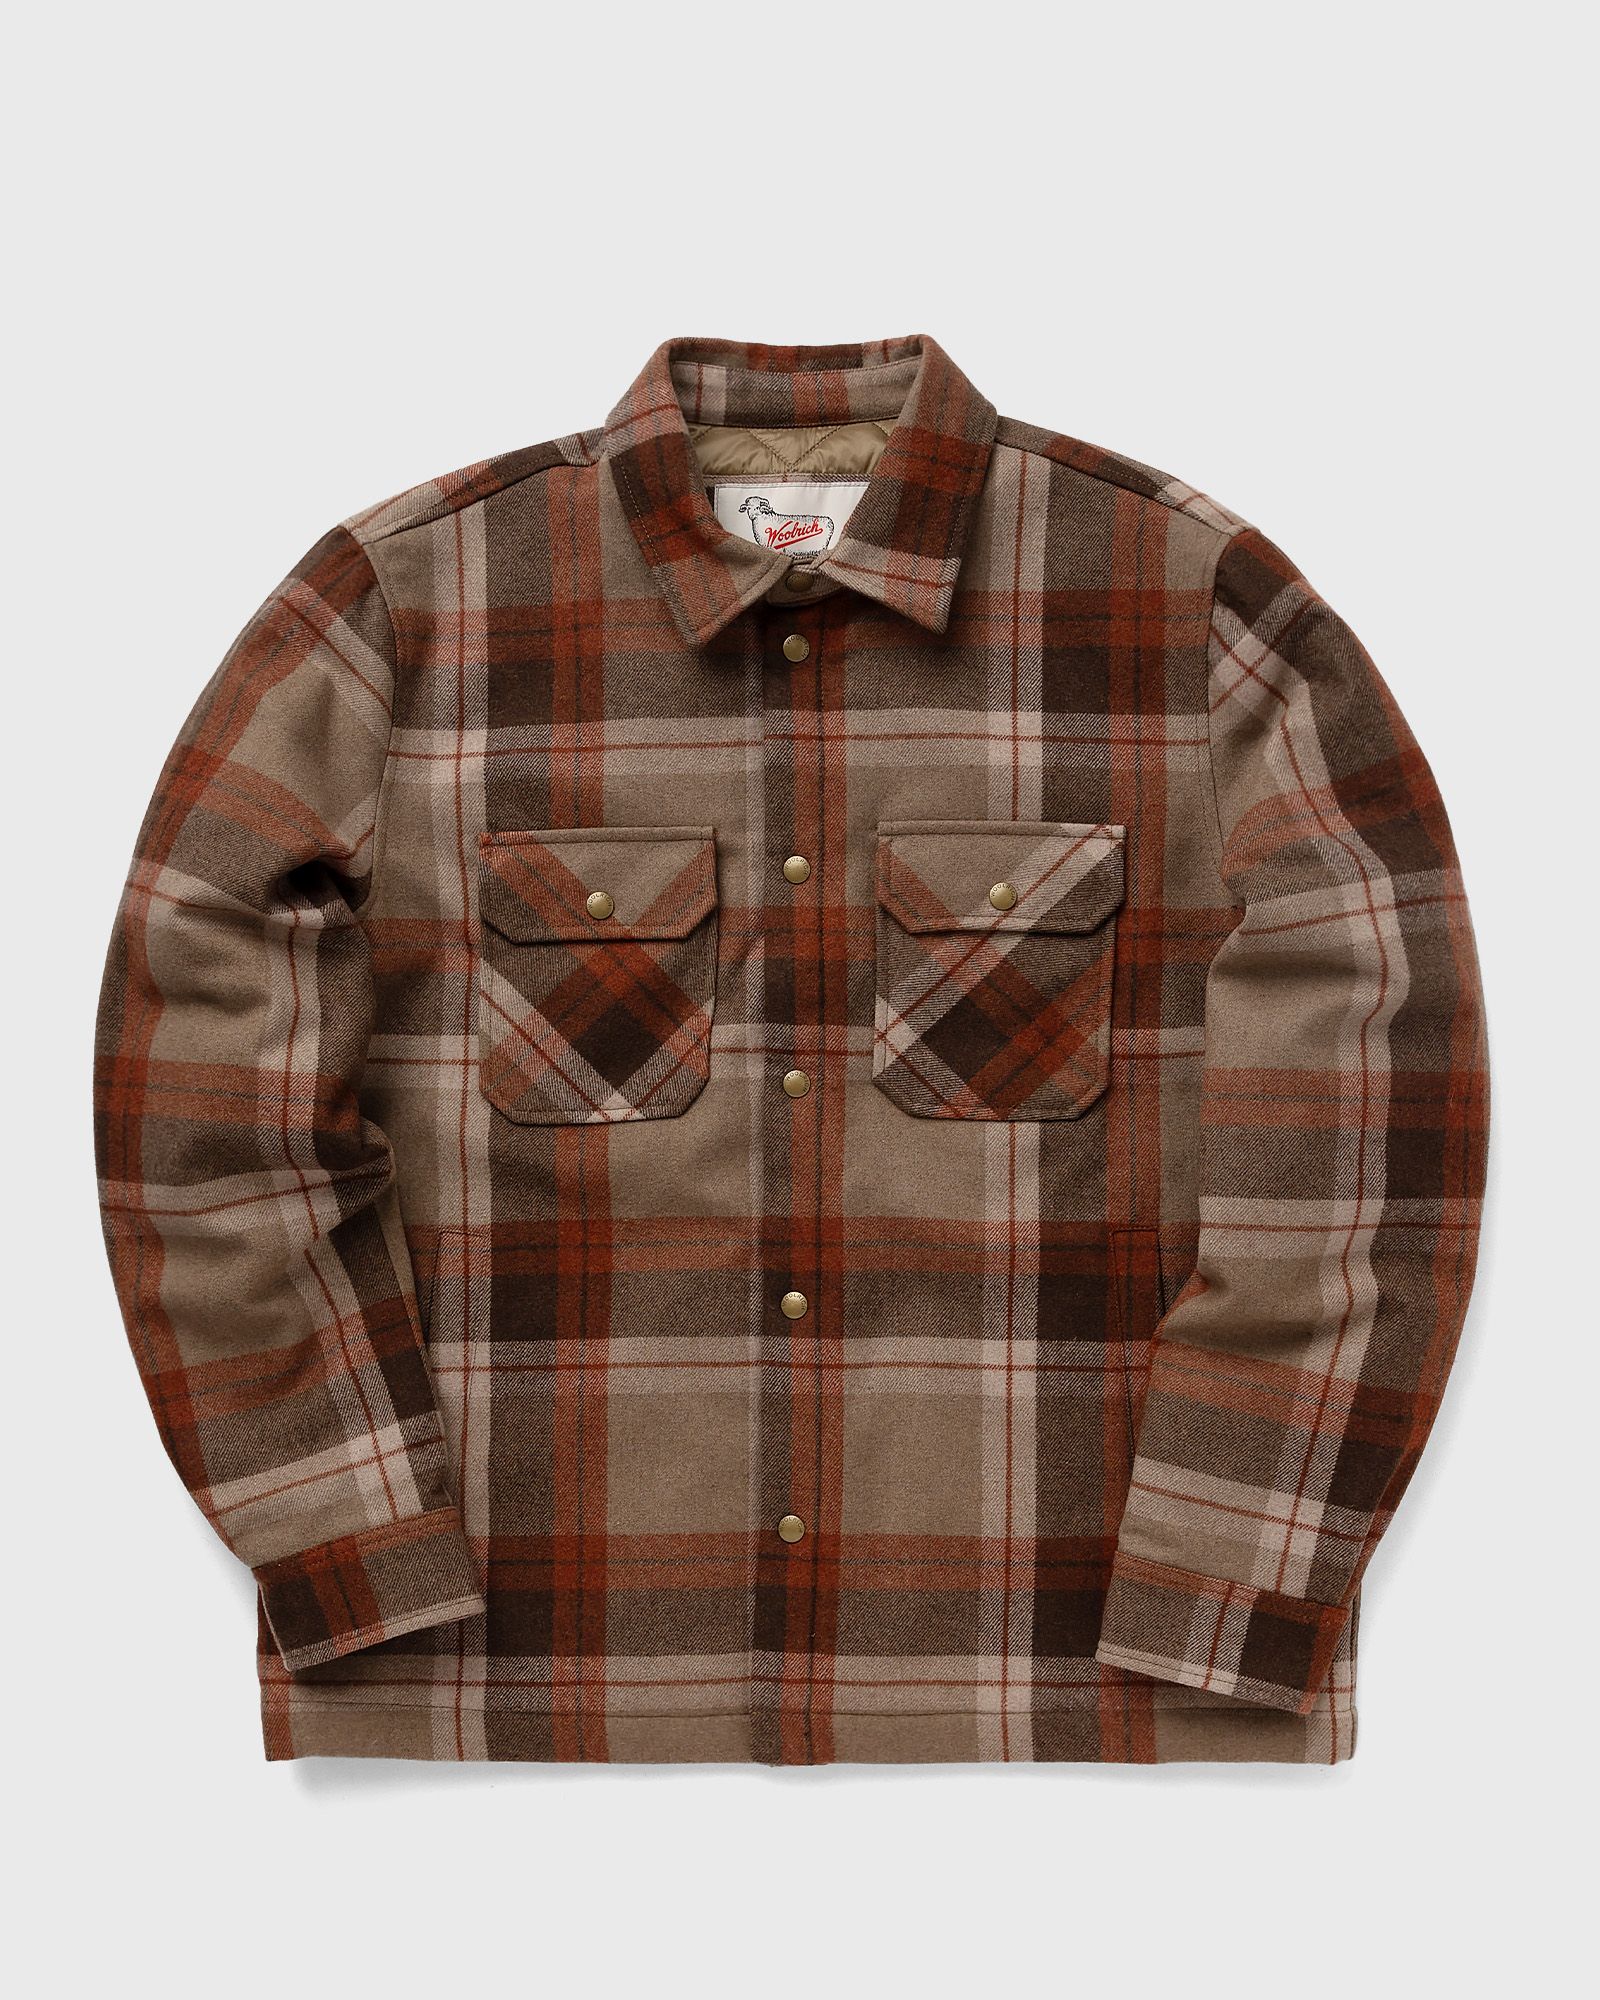 One of these Days - x woolrich flannel overshirt men overshirts brown in größe:xxl